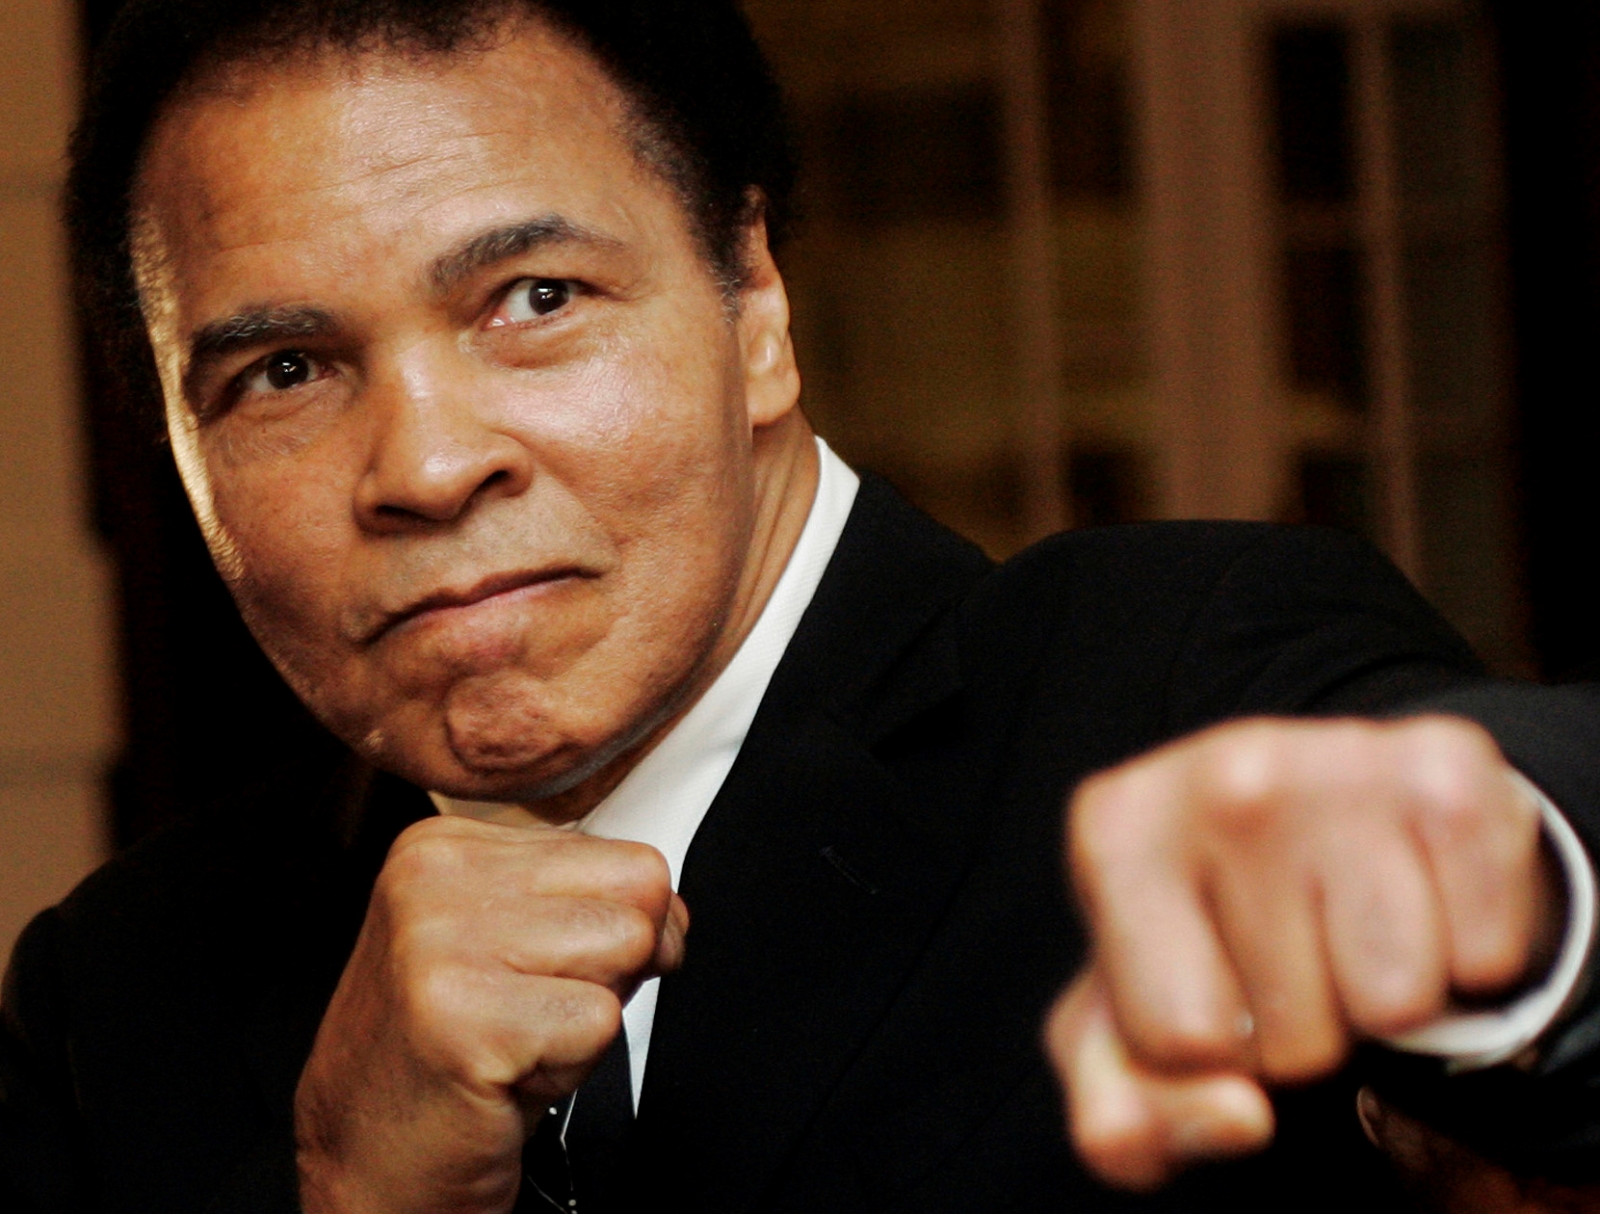 Muhammad Ali dead: Sporting legend's final tweets include Prince, Bono